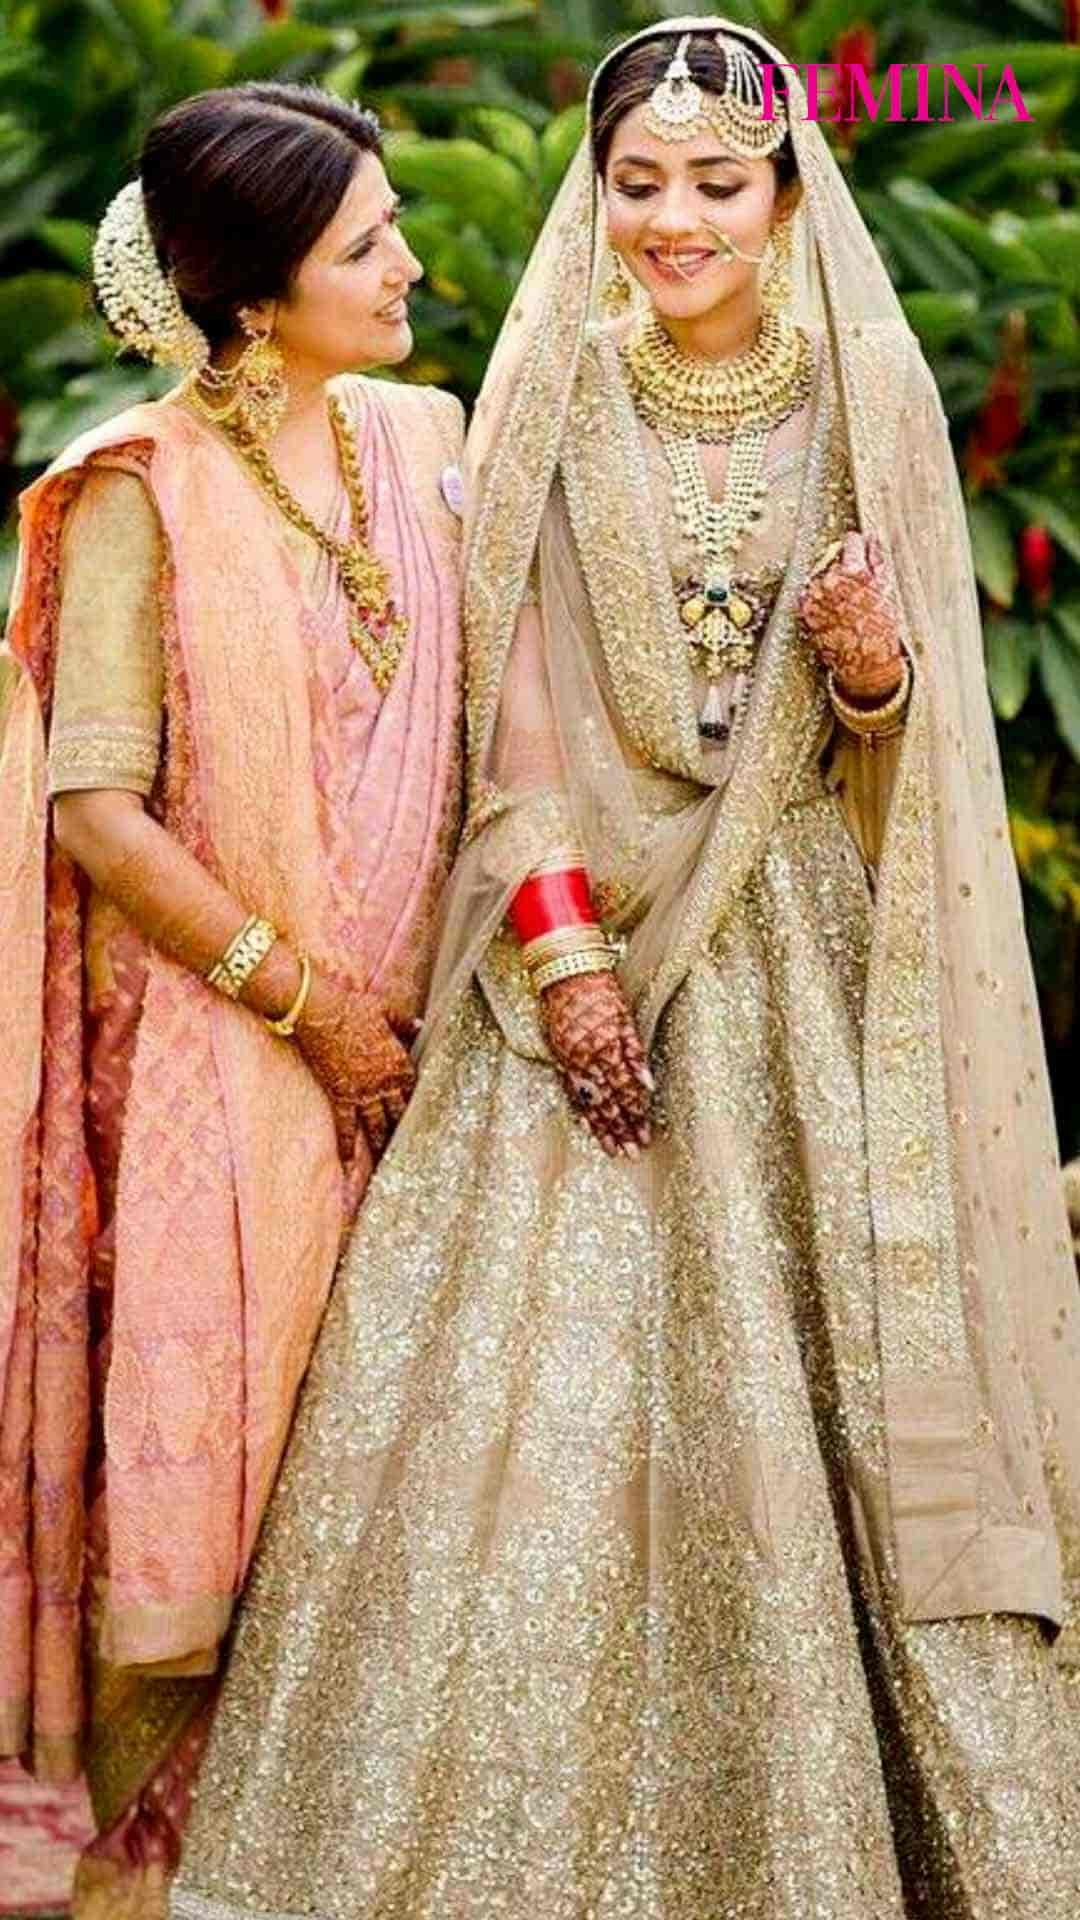 Stylish & Vibrant Meenakari Jewellery Designs for Every Bride-to-be! |  Indian wedding photography, Indian bridal fashion, Goa wedding